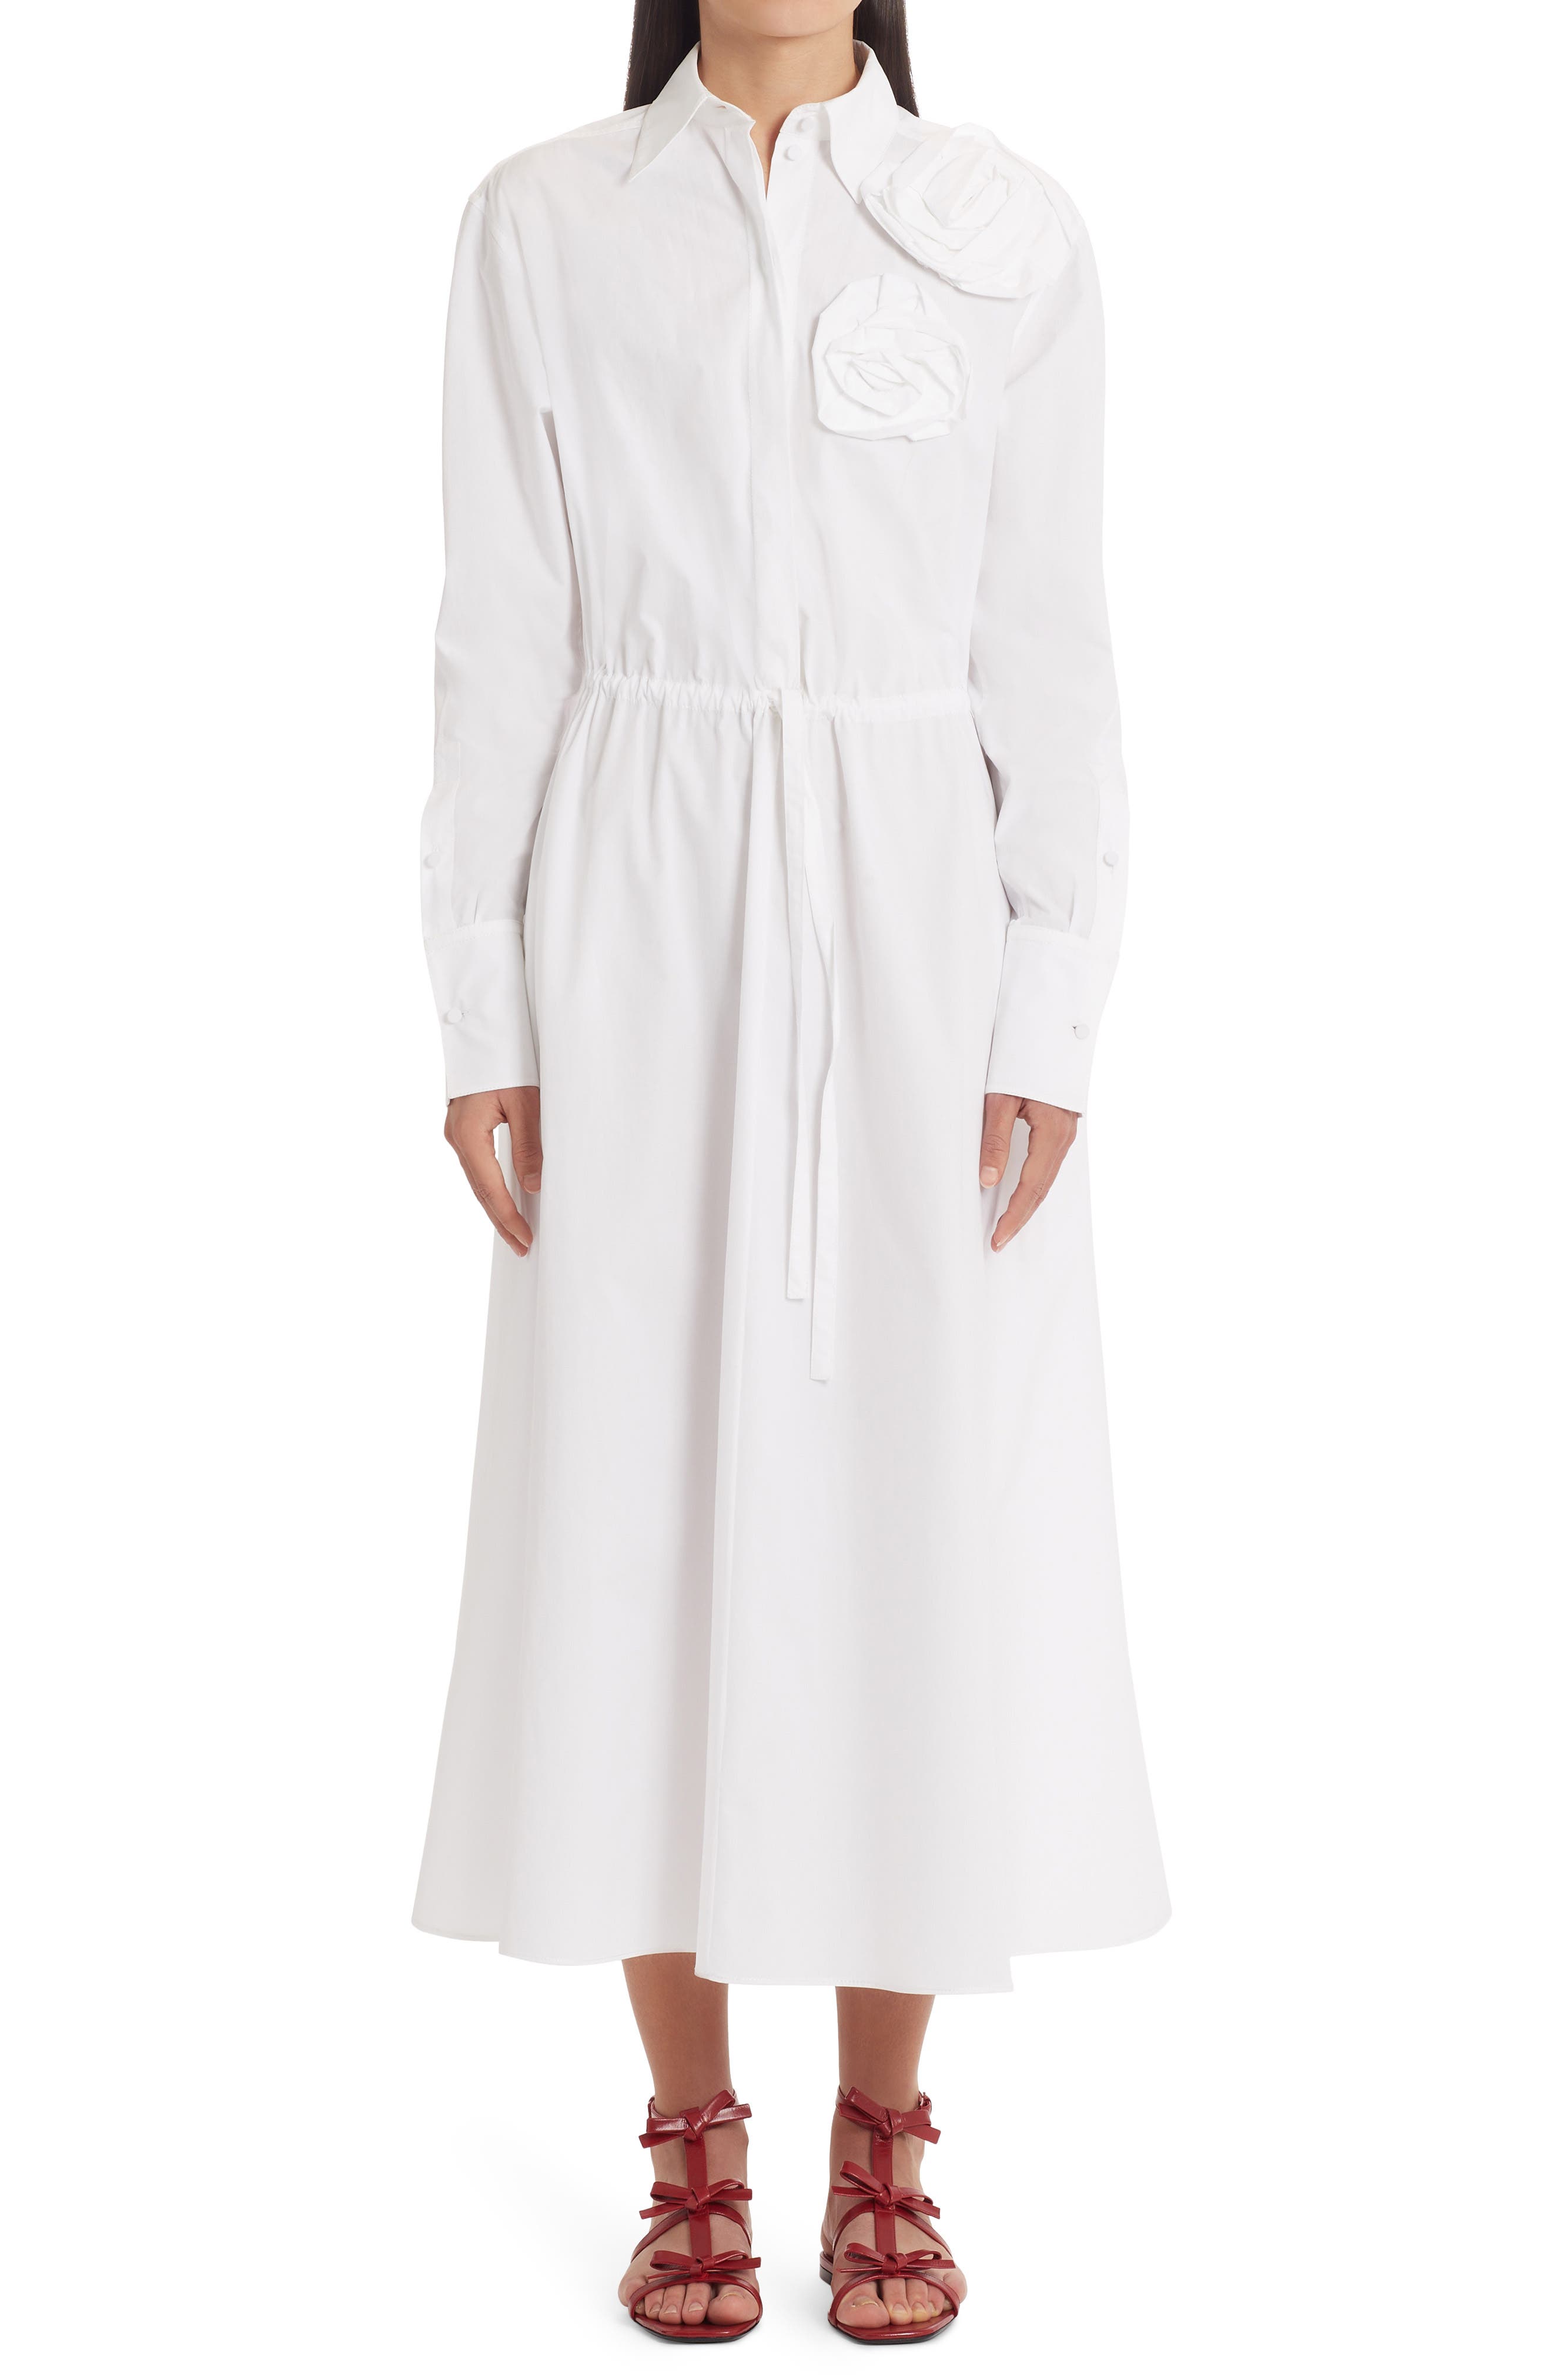 Valentino Floral Applique Long Sleeve Cotton Poplin Midi Dress in 001 Bianco Ottico at Nordstrom, Size 6 Us